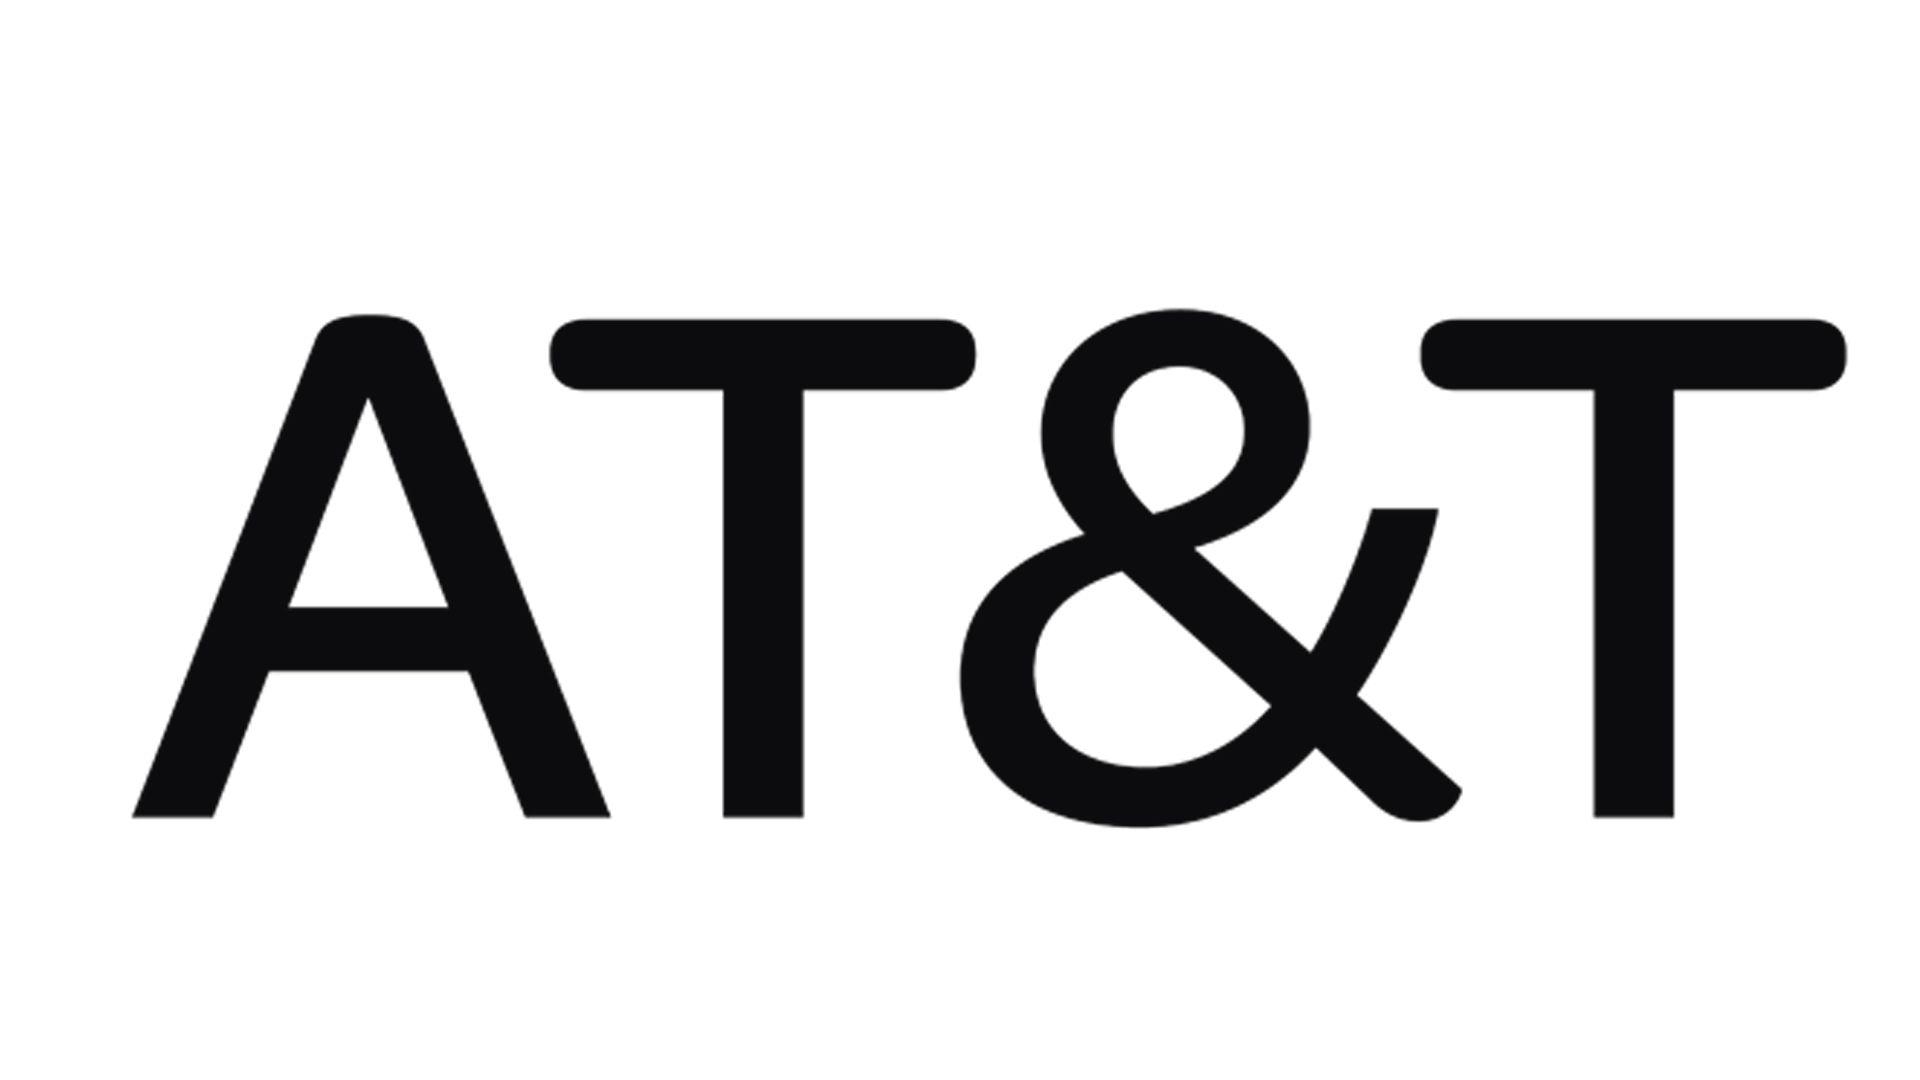 Atat Logo - AT&T Logo, AT&T Symbol Meaning, History and Evolution